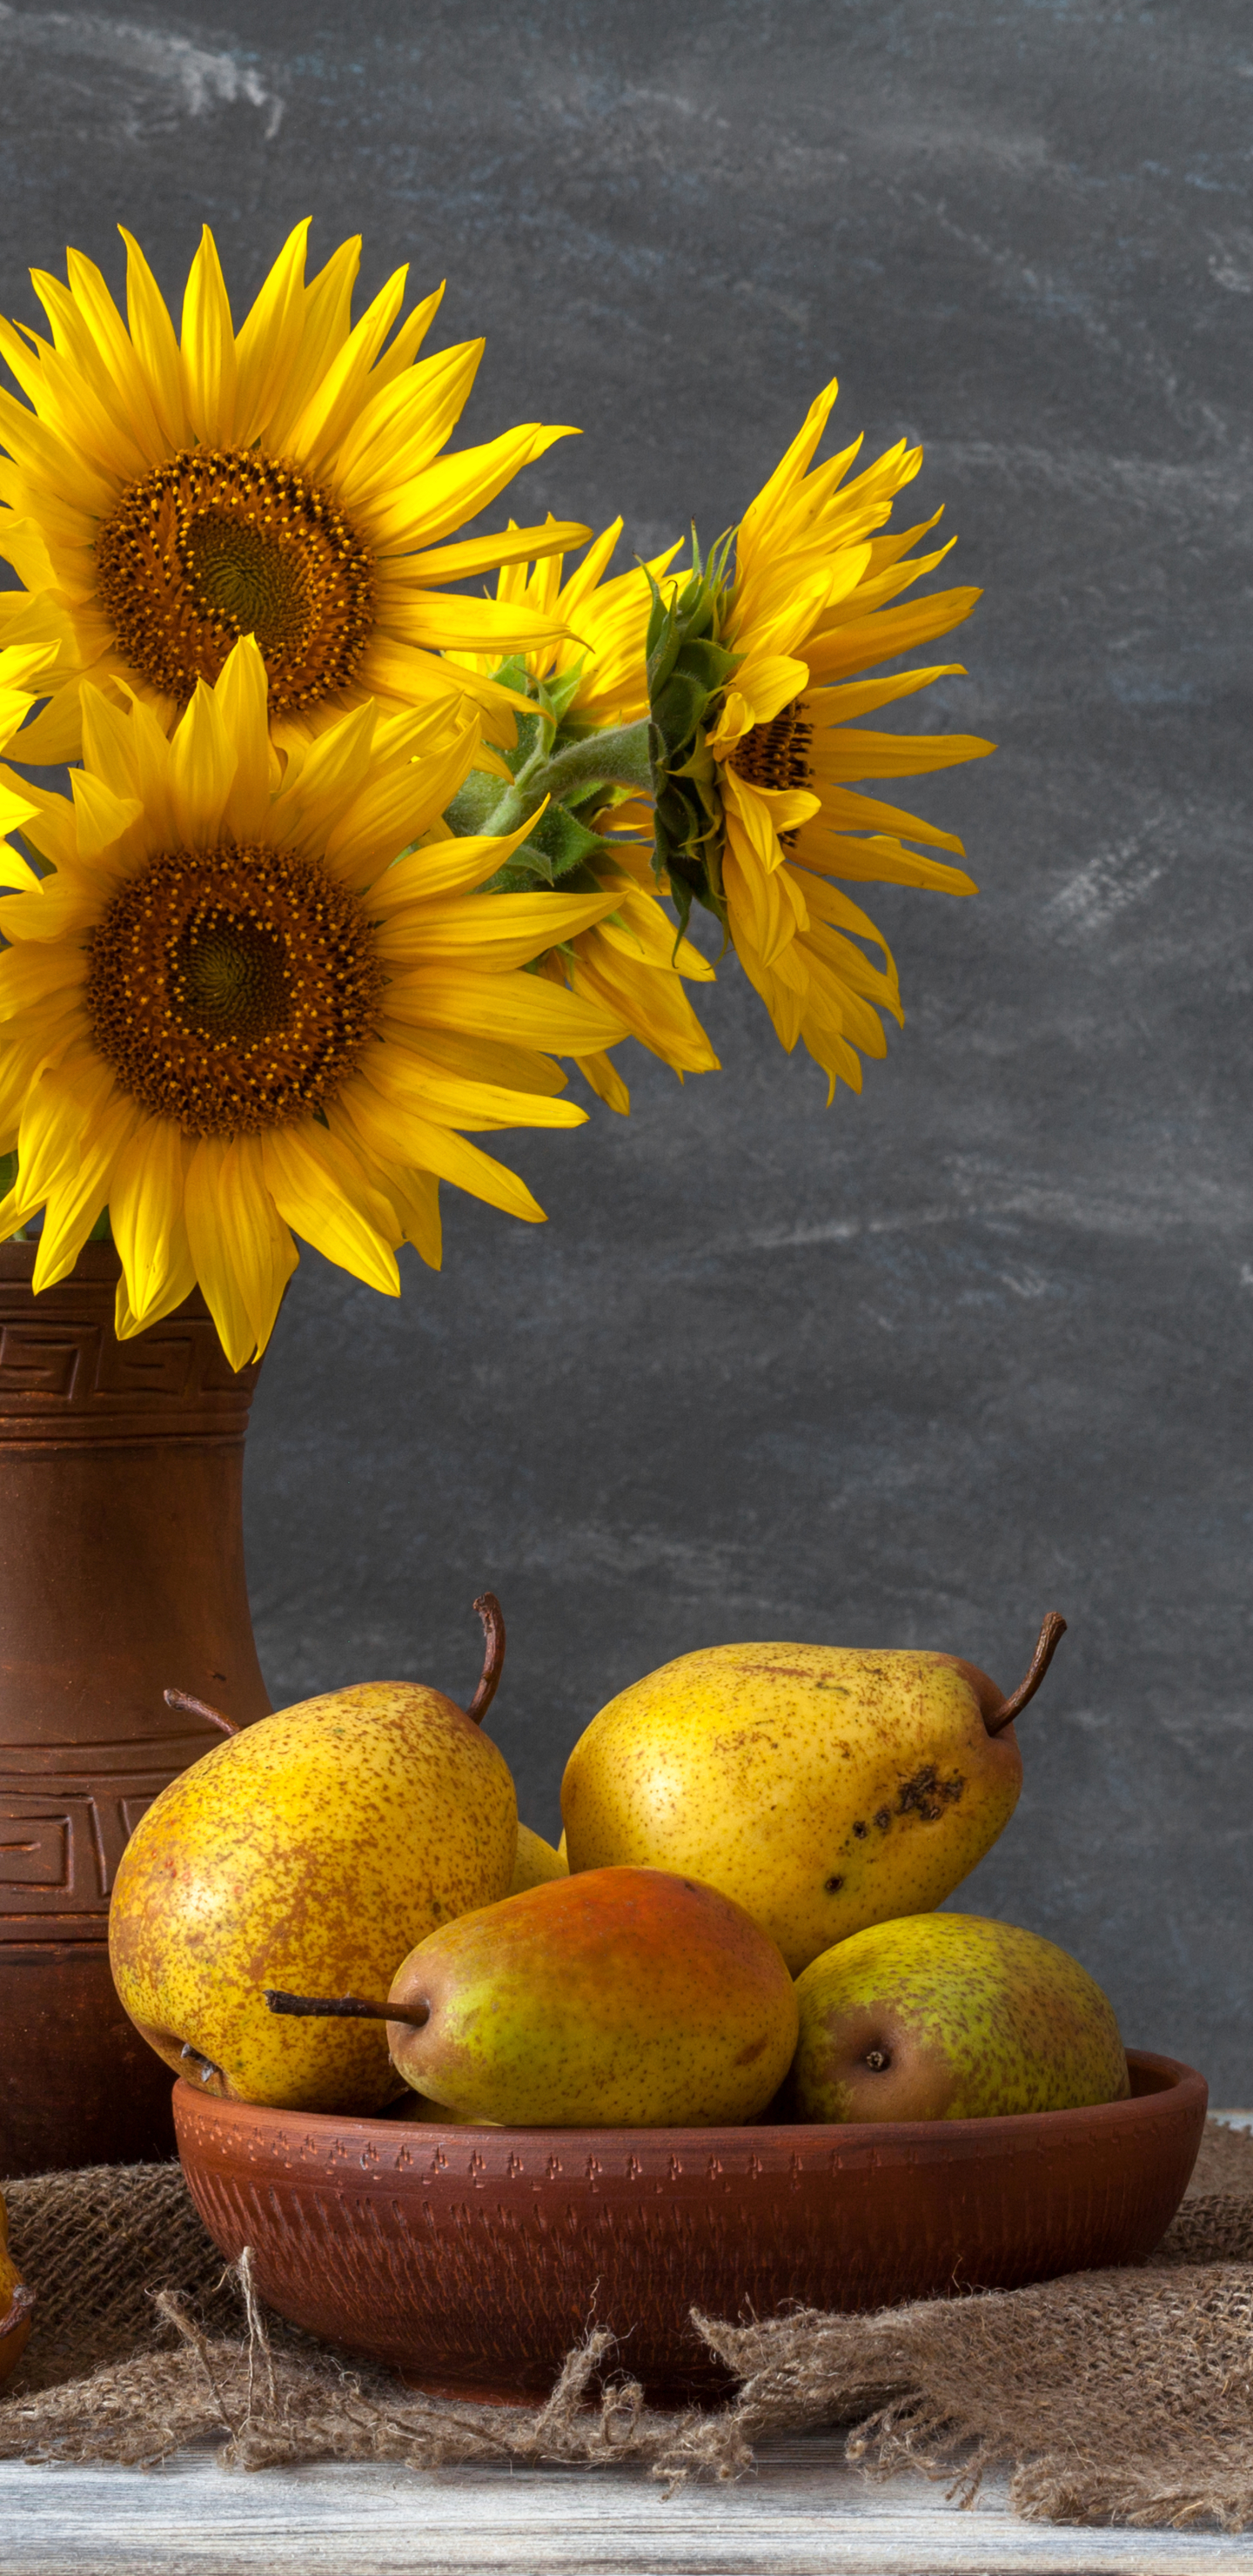 photography, still life, pear, yellow flower, sunflower, bowl, vase